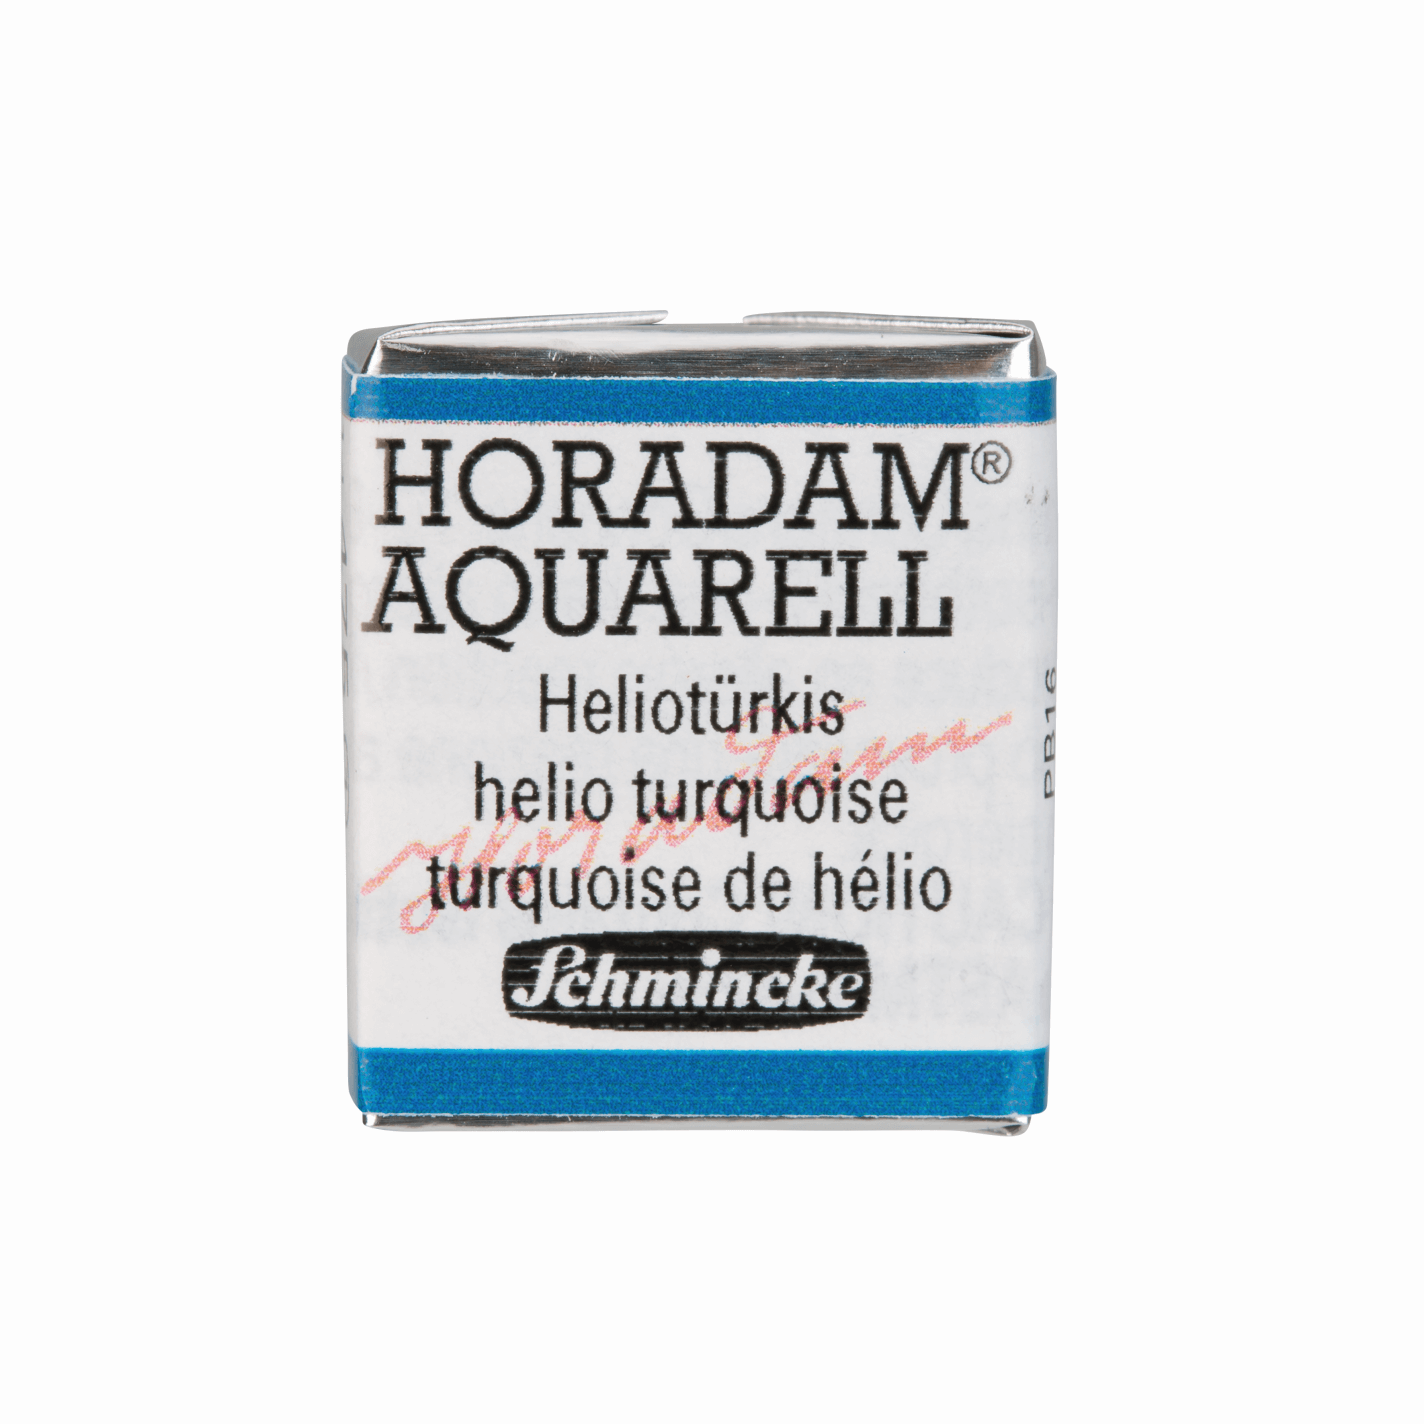 Schmincke Horadam Aquarell pans 1/2 pan Helio Turquoise